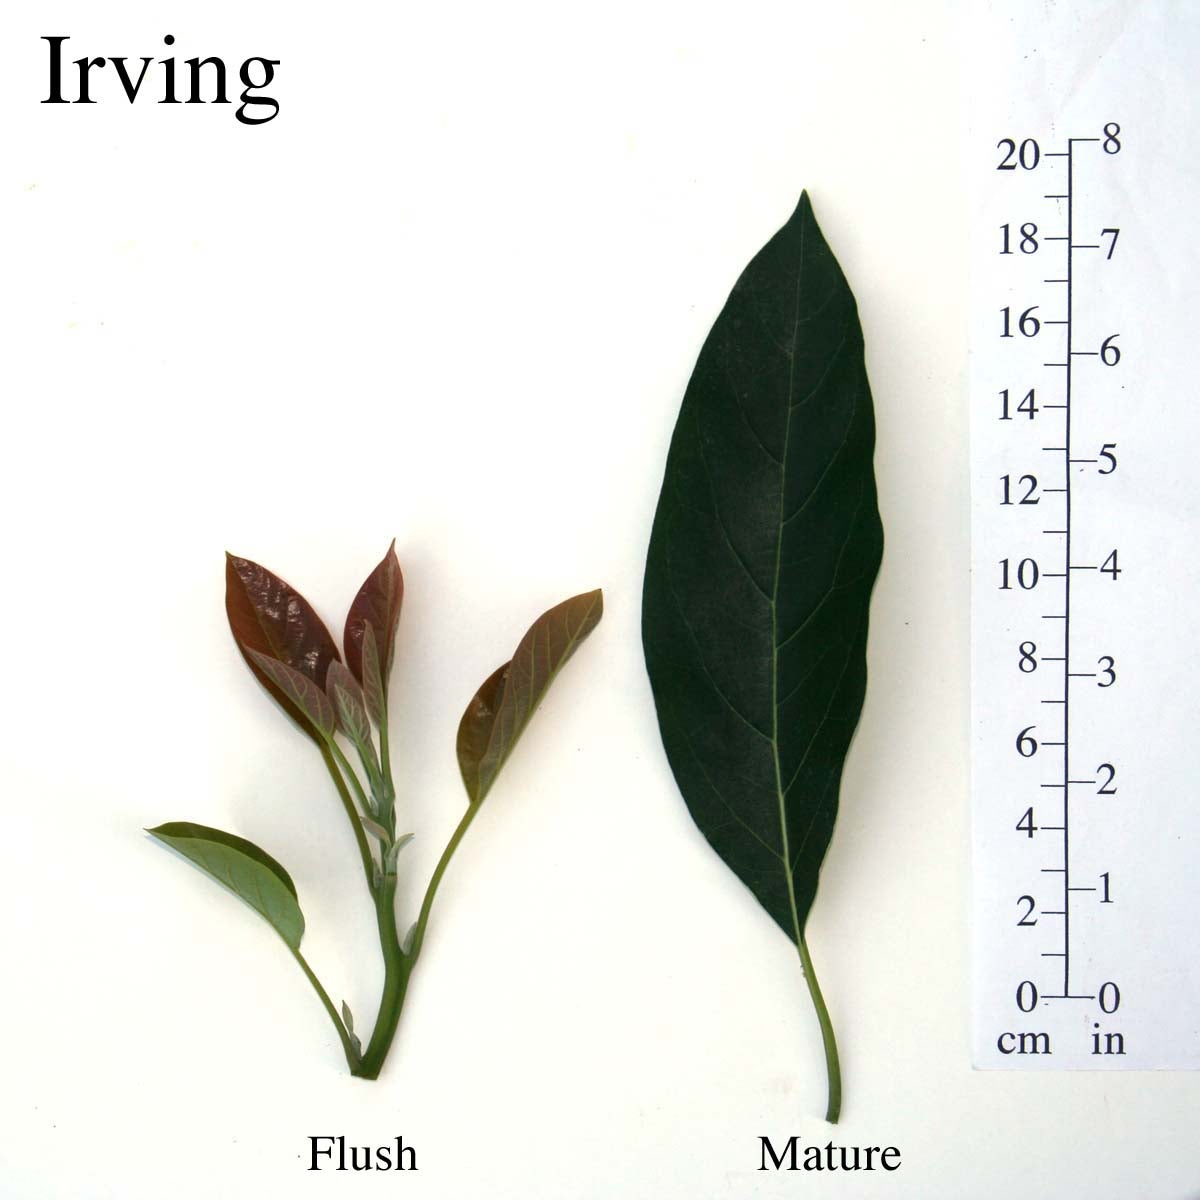 Irving Leaves